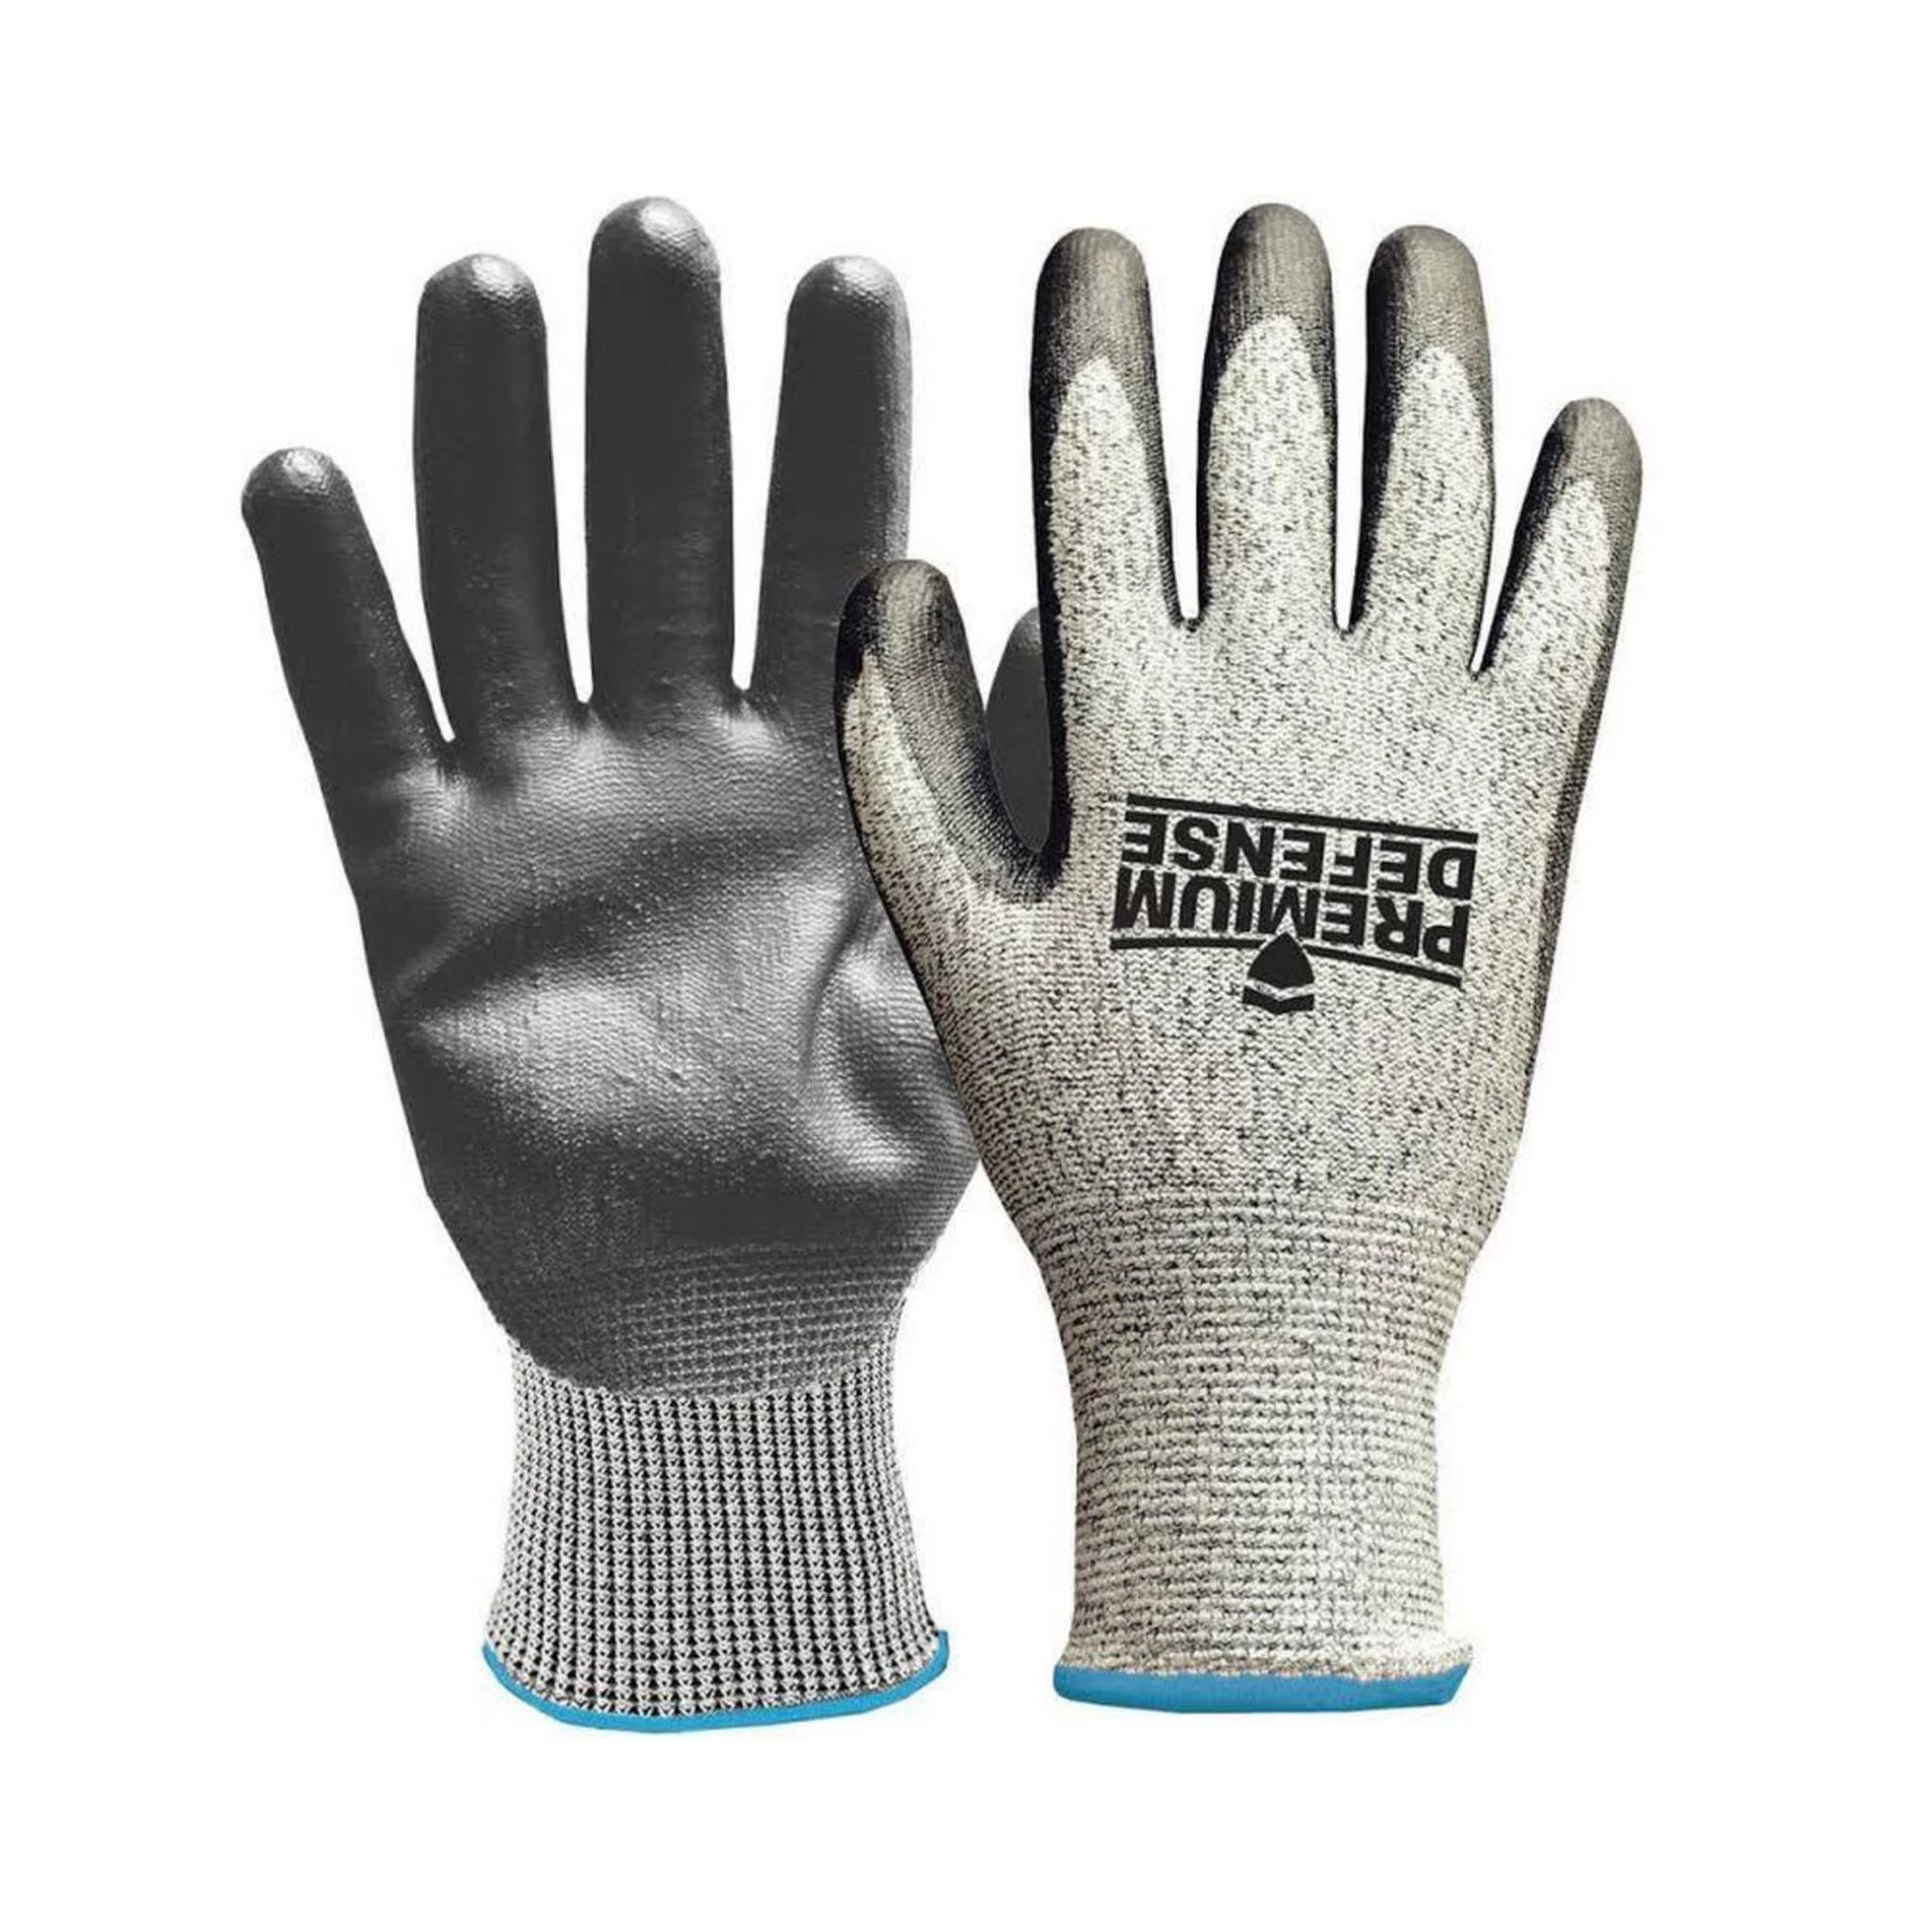 BTP Ansi 4 Cut Resistant Glove